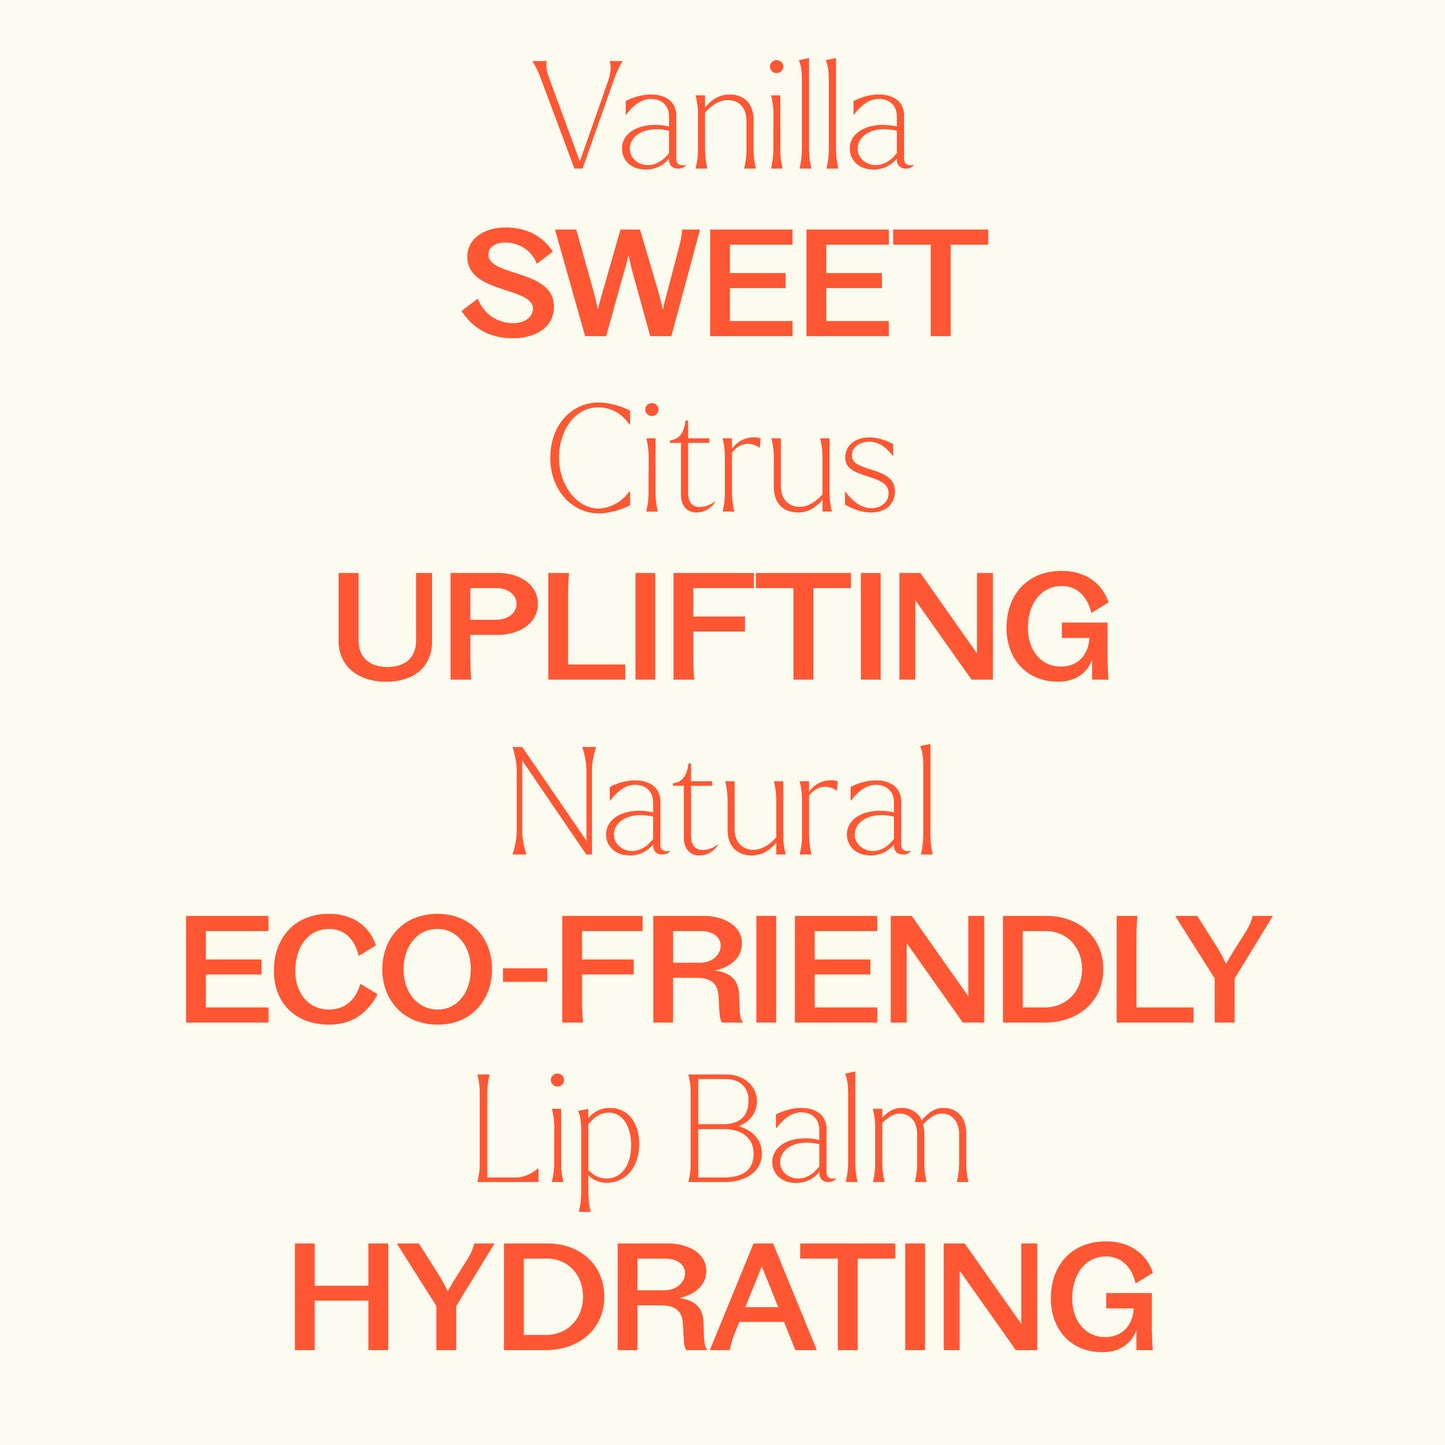 Vanilla Citrus Natural Lip Balm is sweet, uplifting, eco-friendly, hydrating